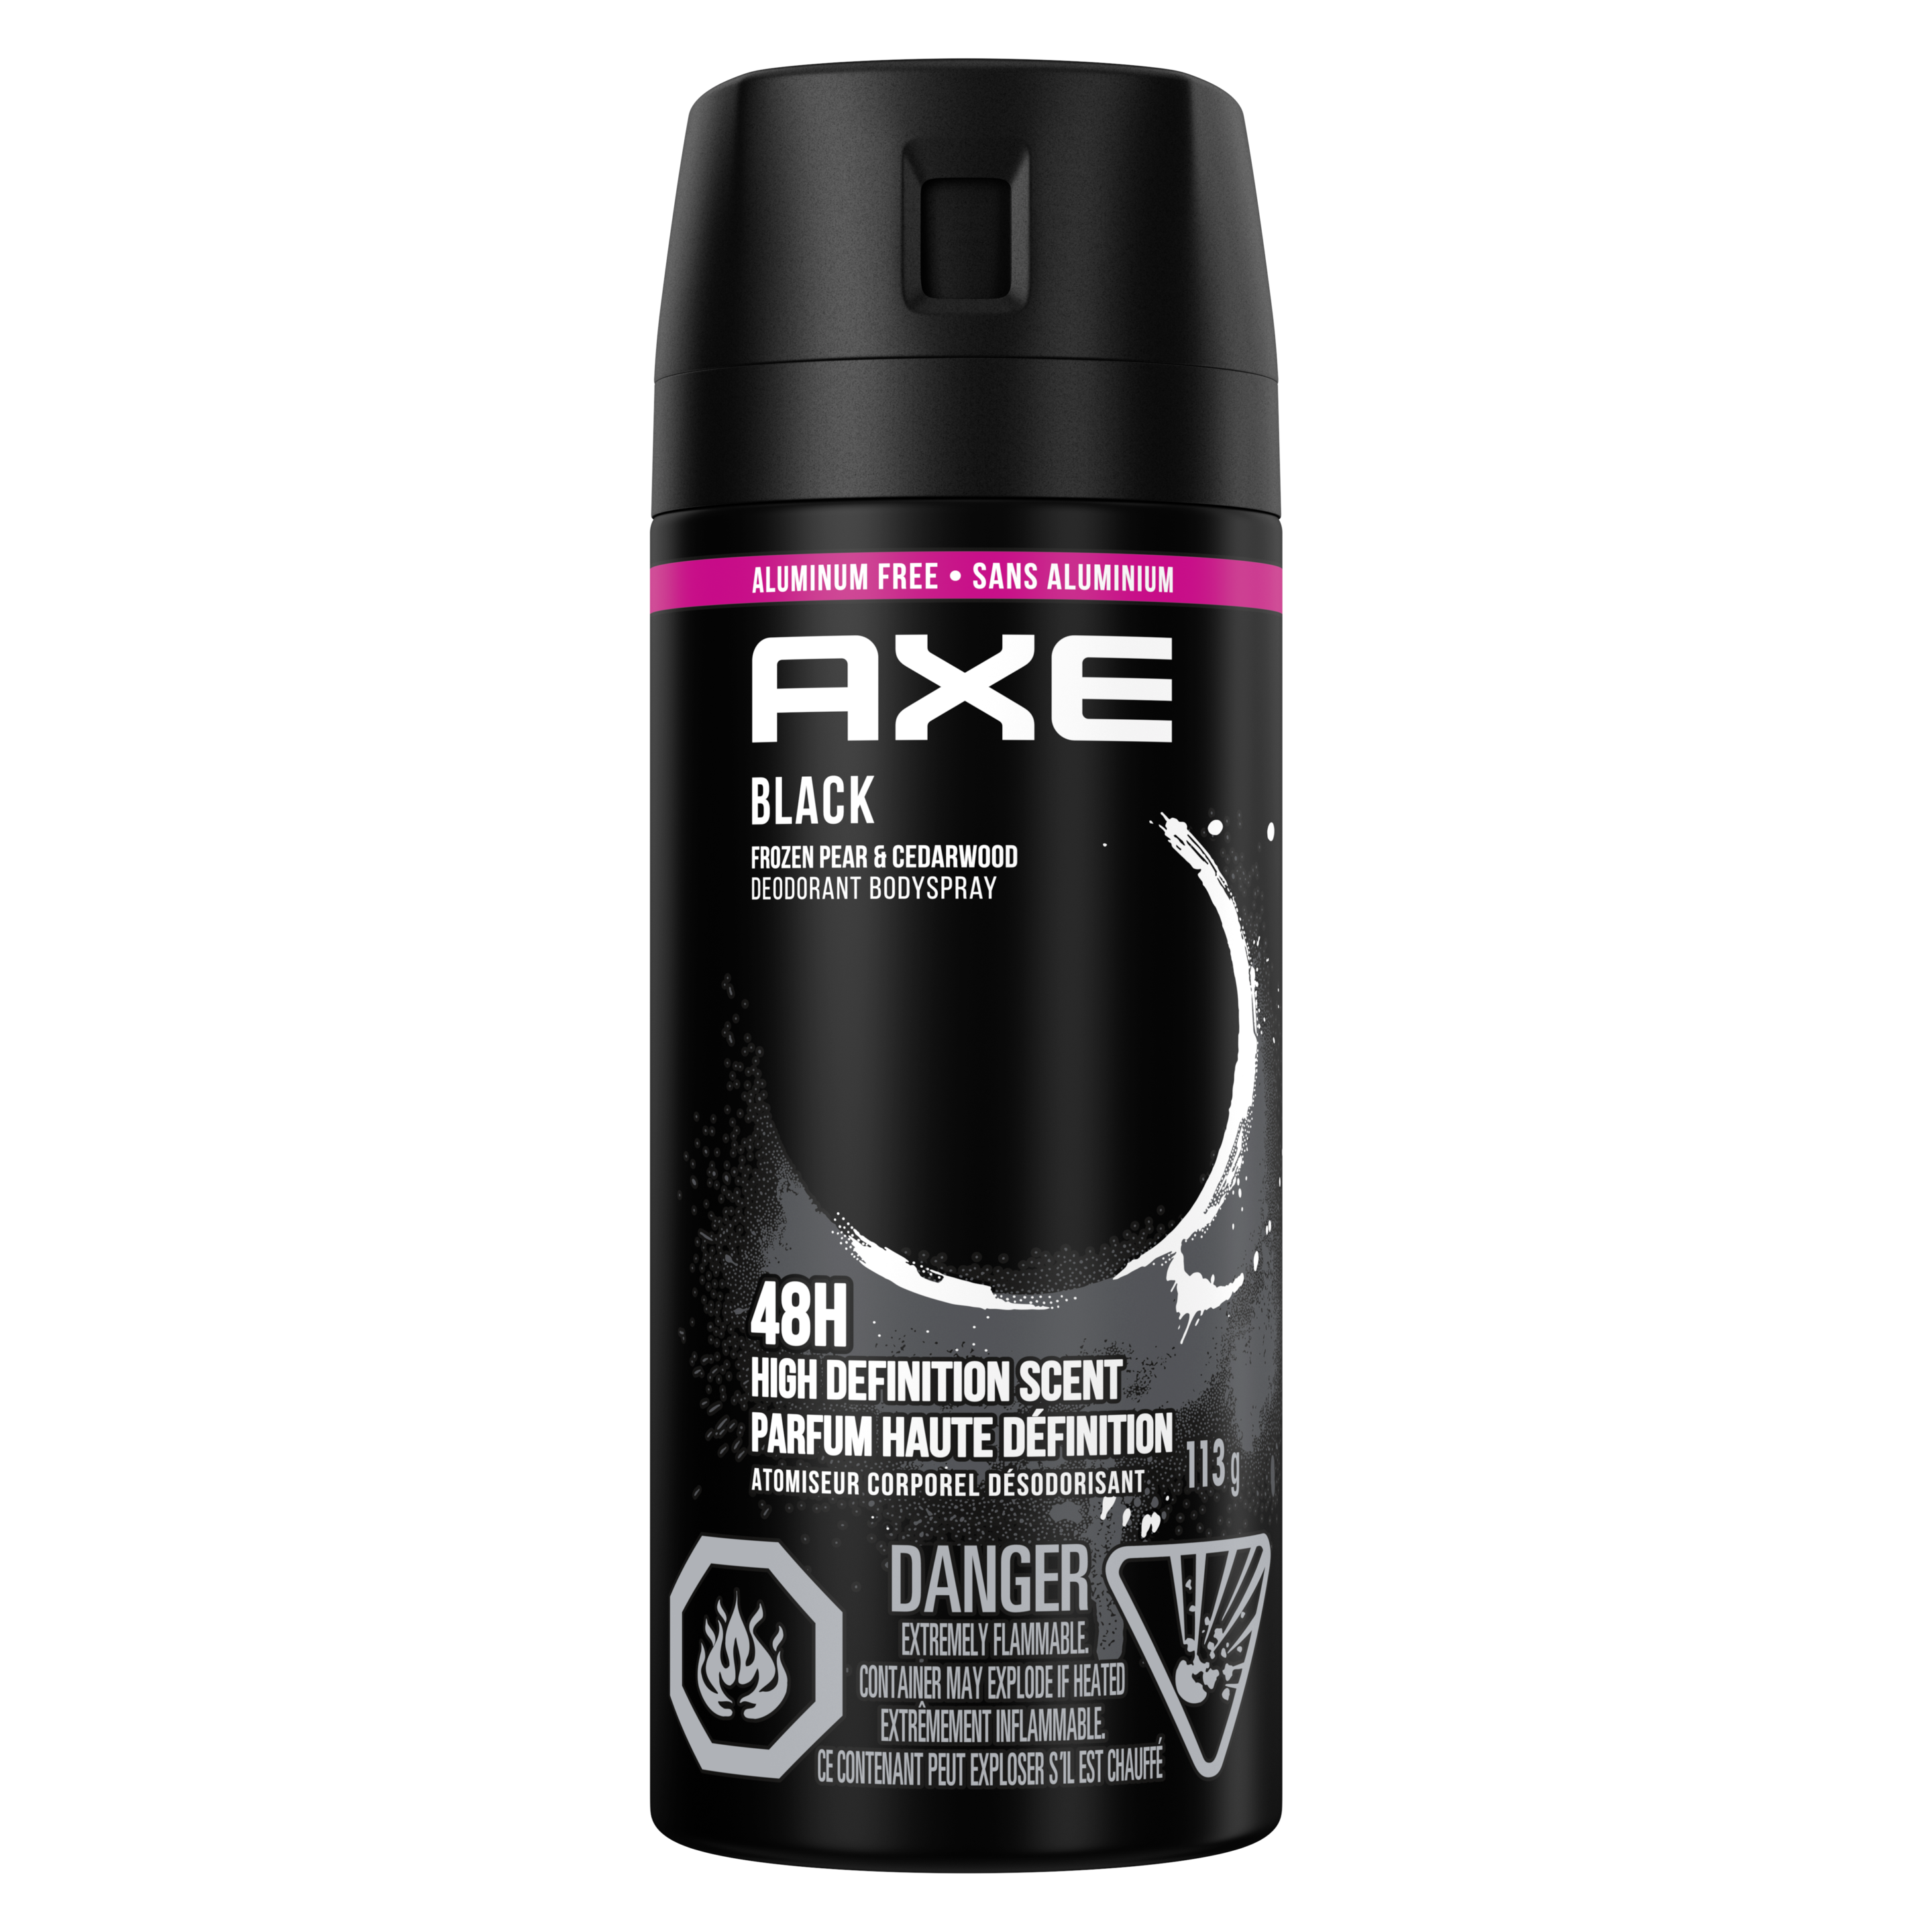 AXE Black Deodorant Body Spray